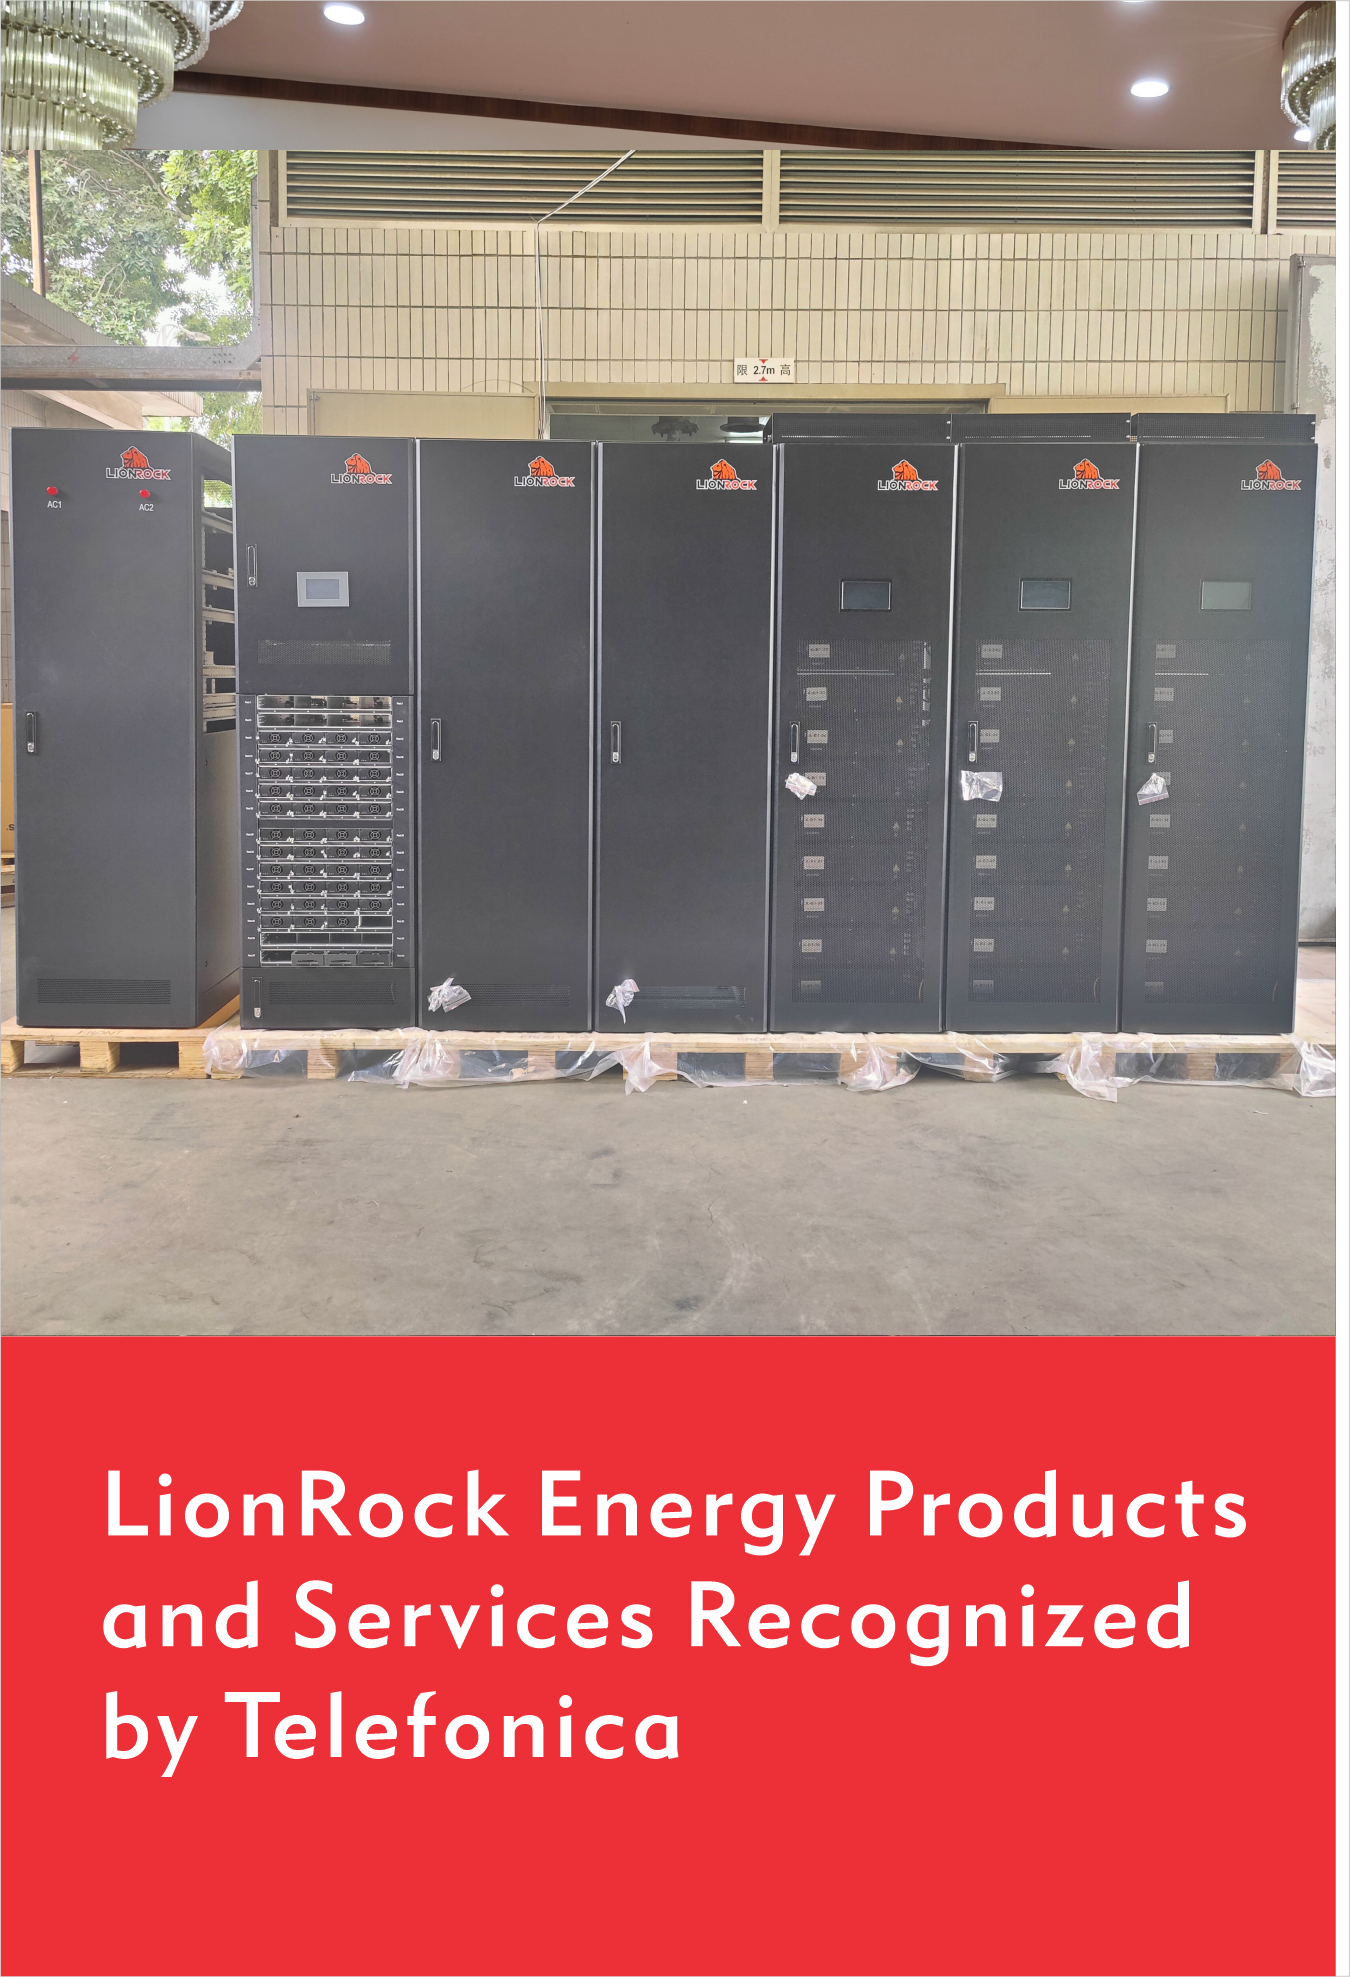 3TECH,LionRock,Telecom energy solutions,DataCage,Energy Cabinet Energy,Storage